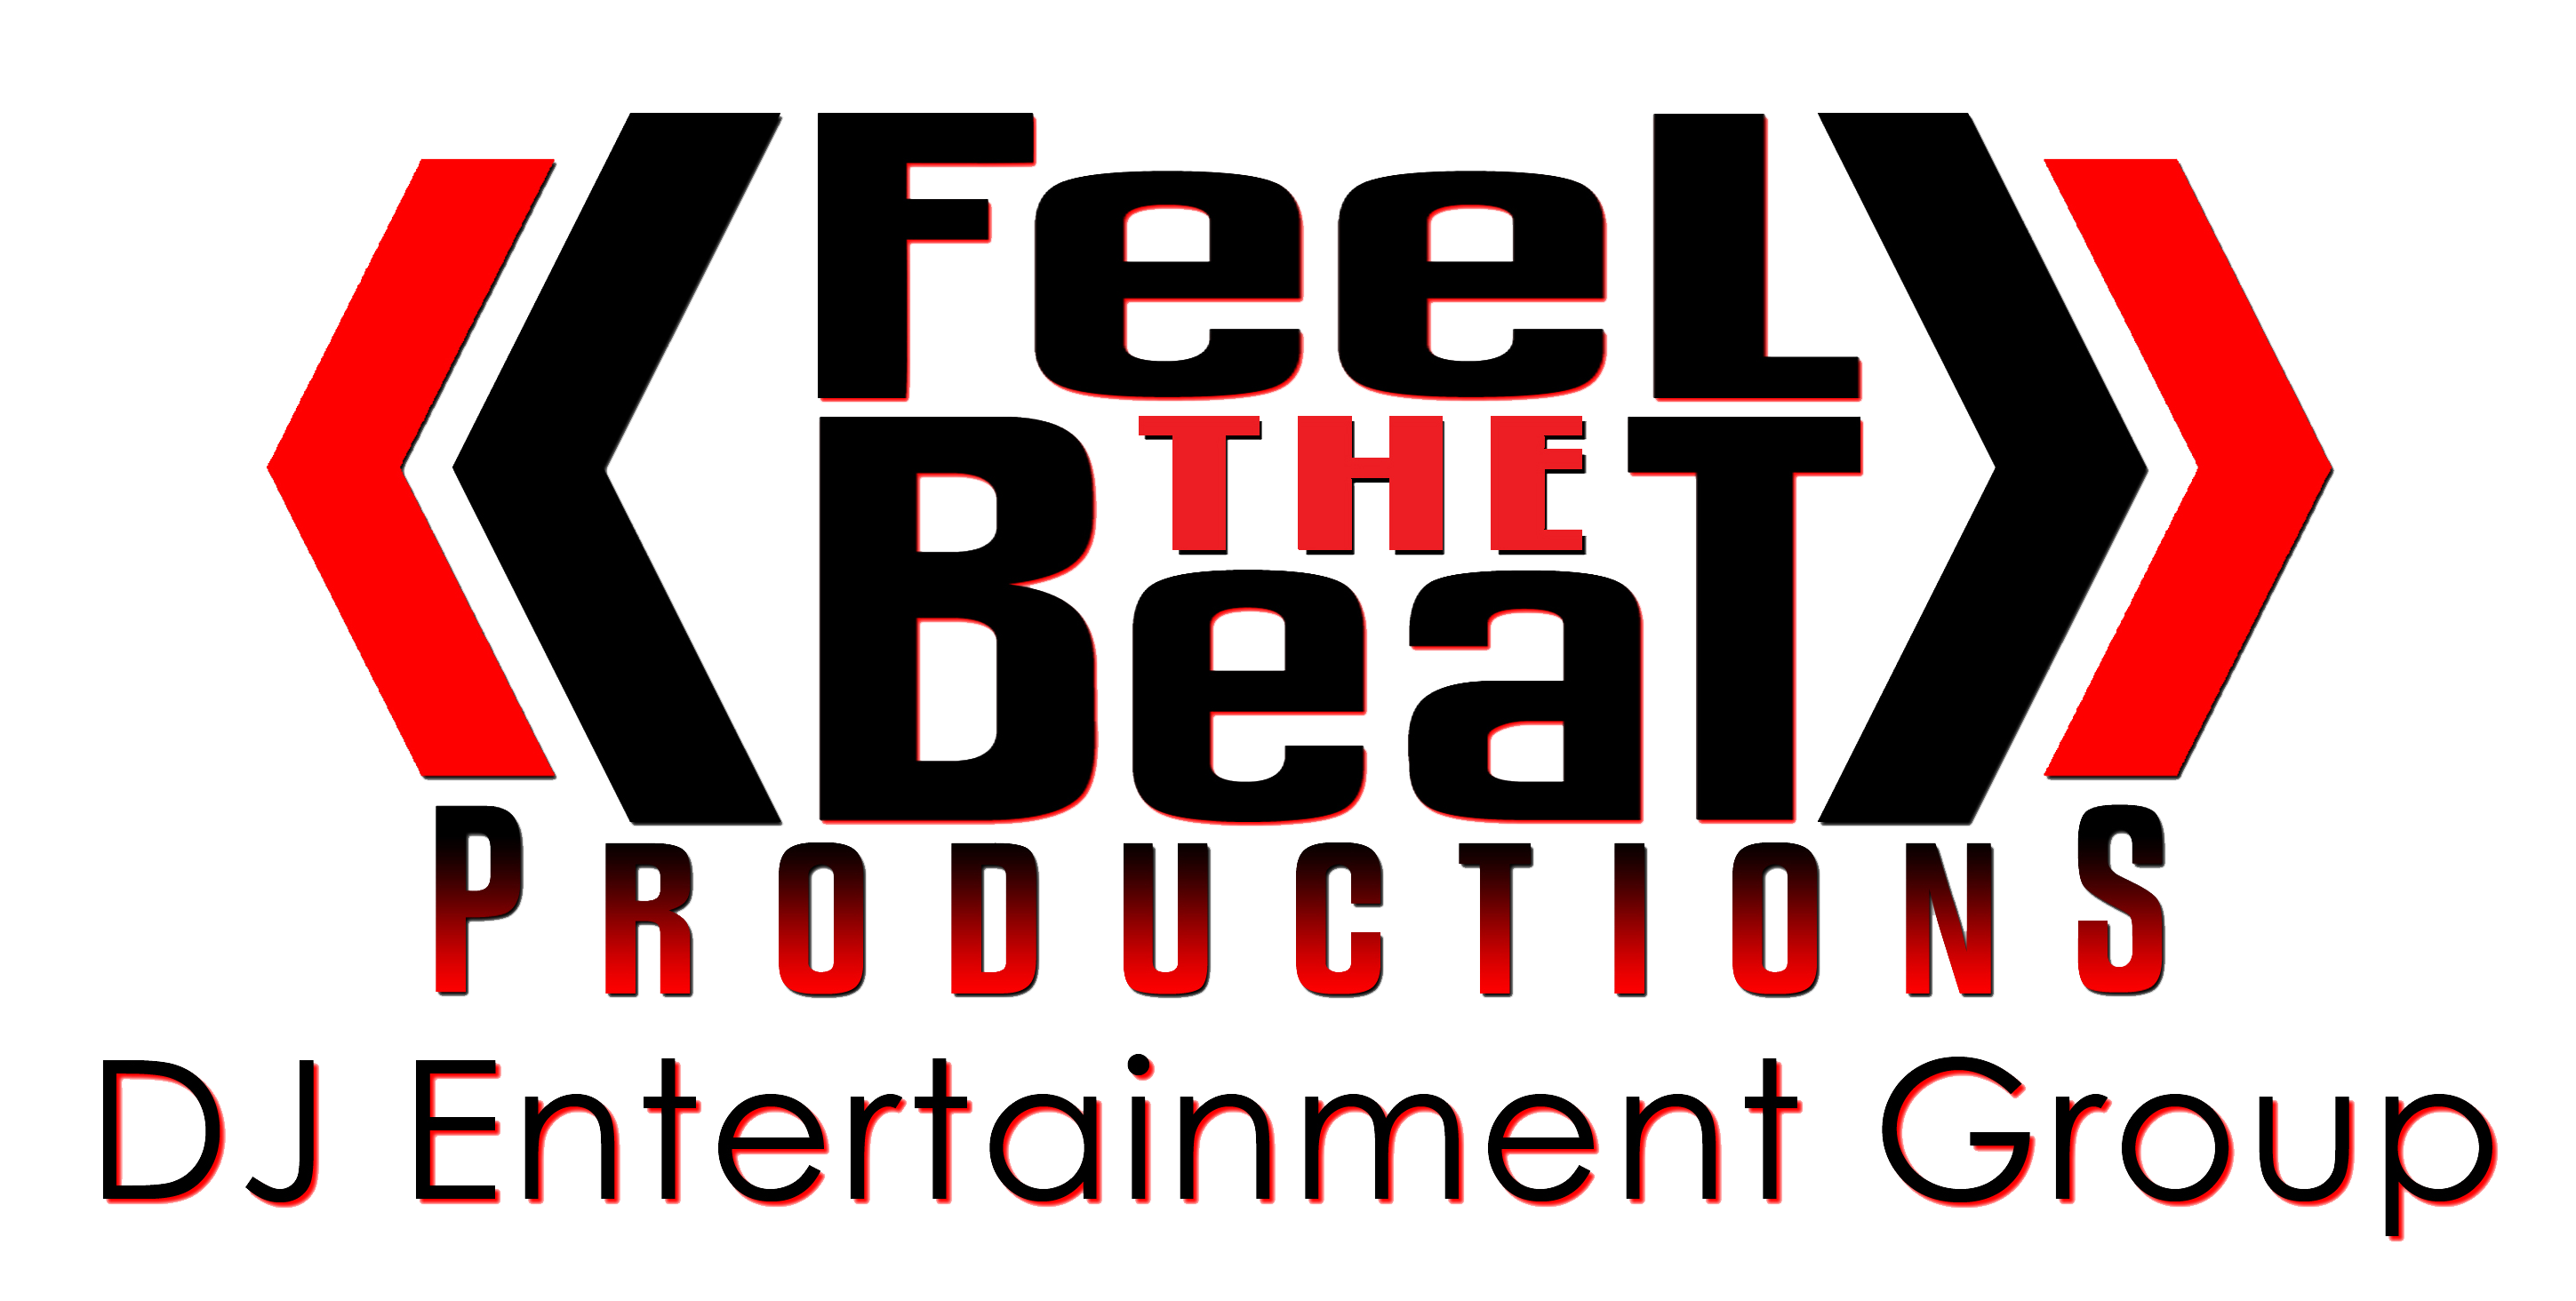 feel the beat dj logo